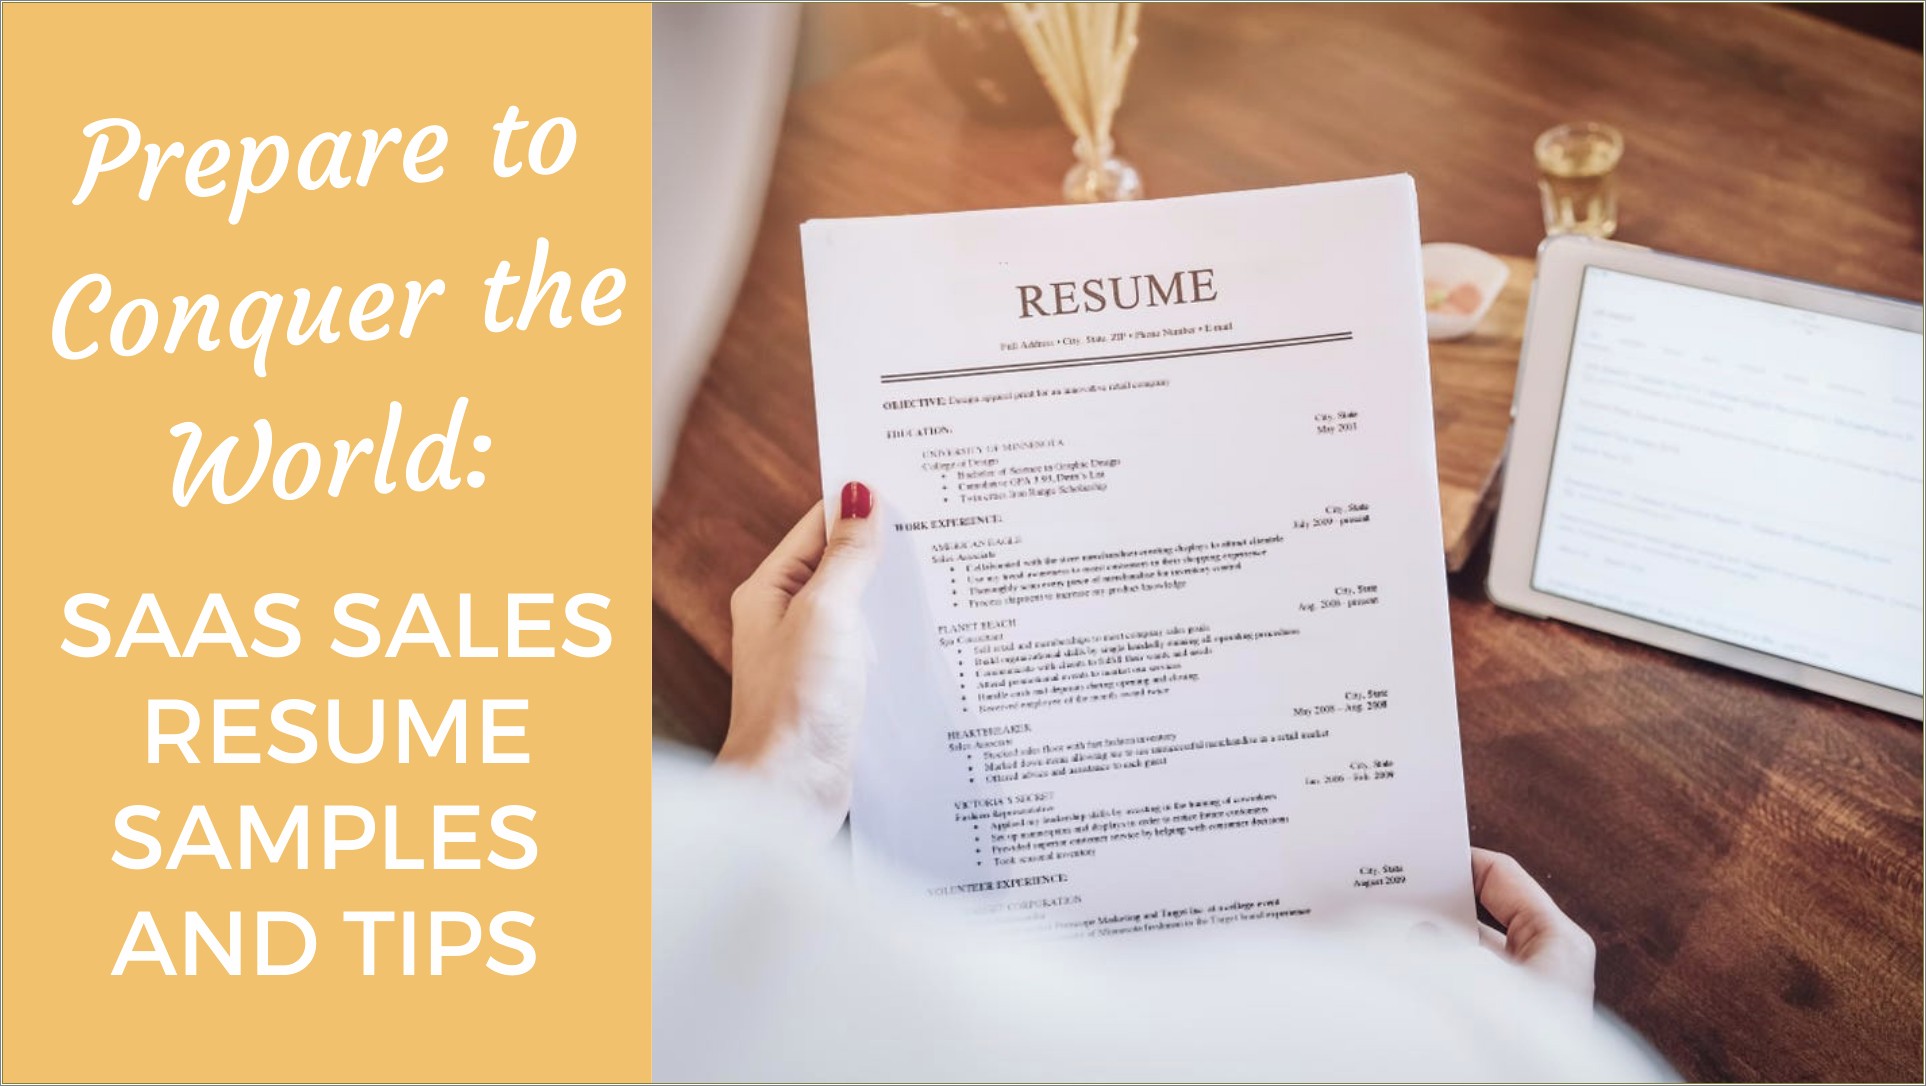 Saas Sales Skills For A Resume